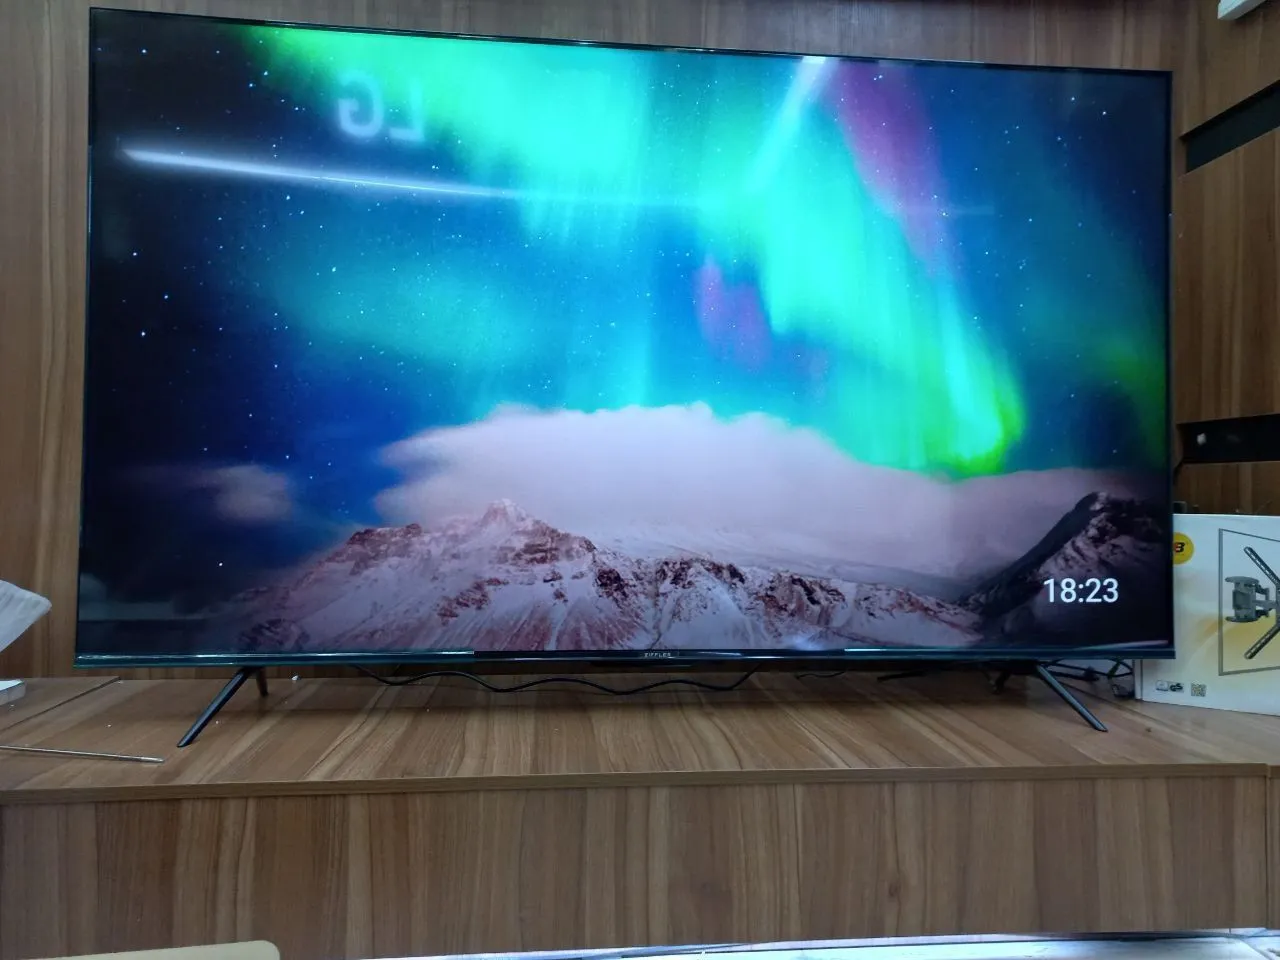 Телевизор Ziffler 4K Smart TV Android#2